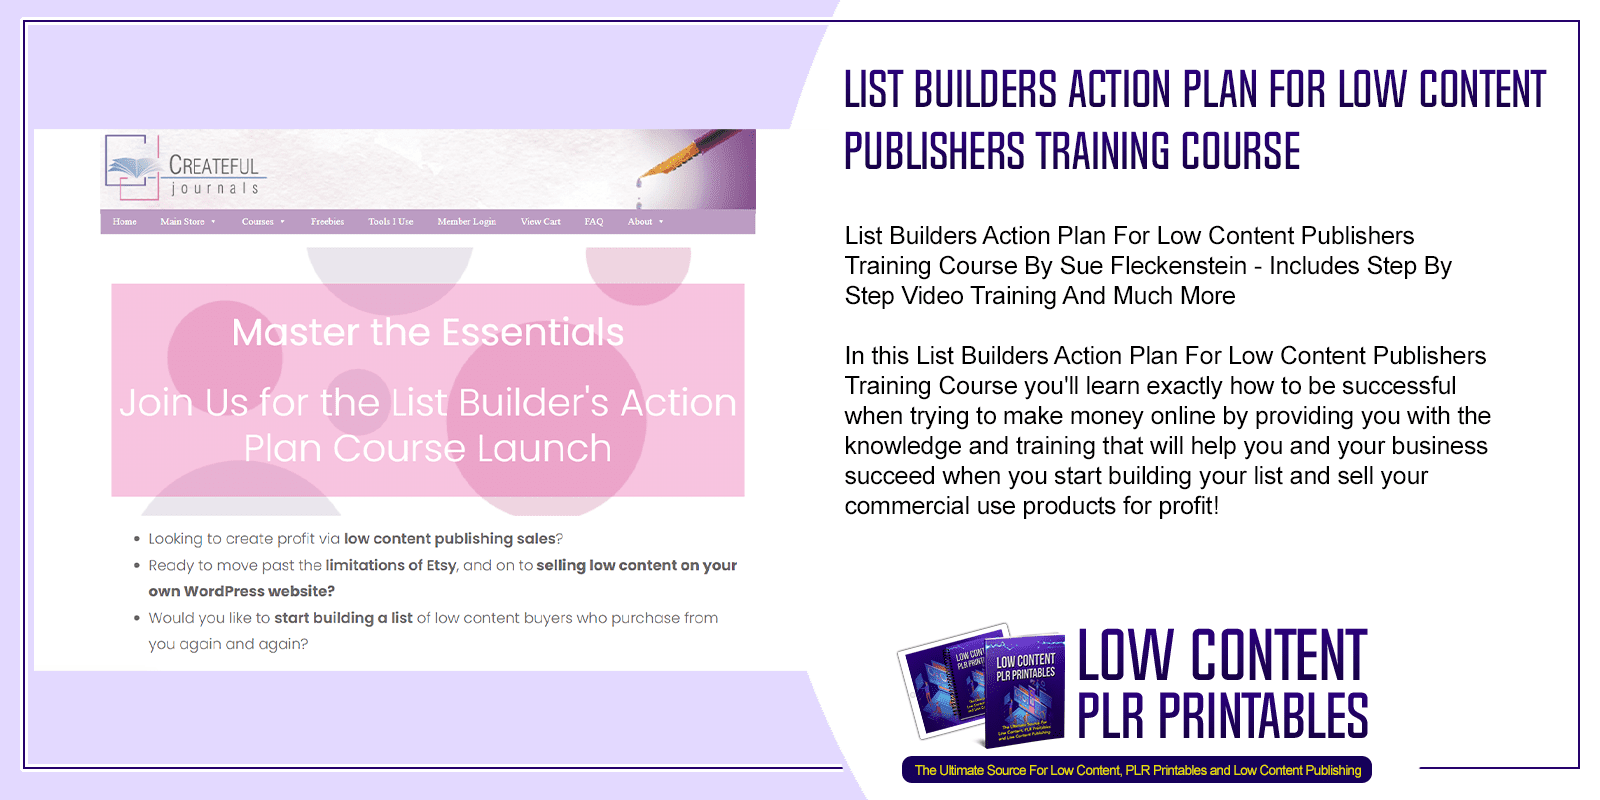 List Builders Action Plan For Low Content Publishers Training Course